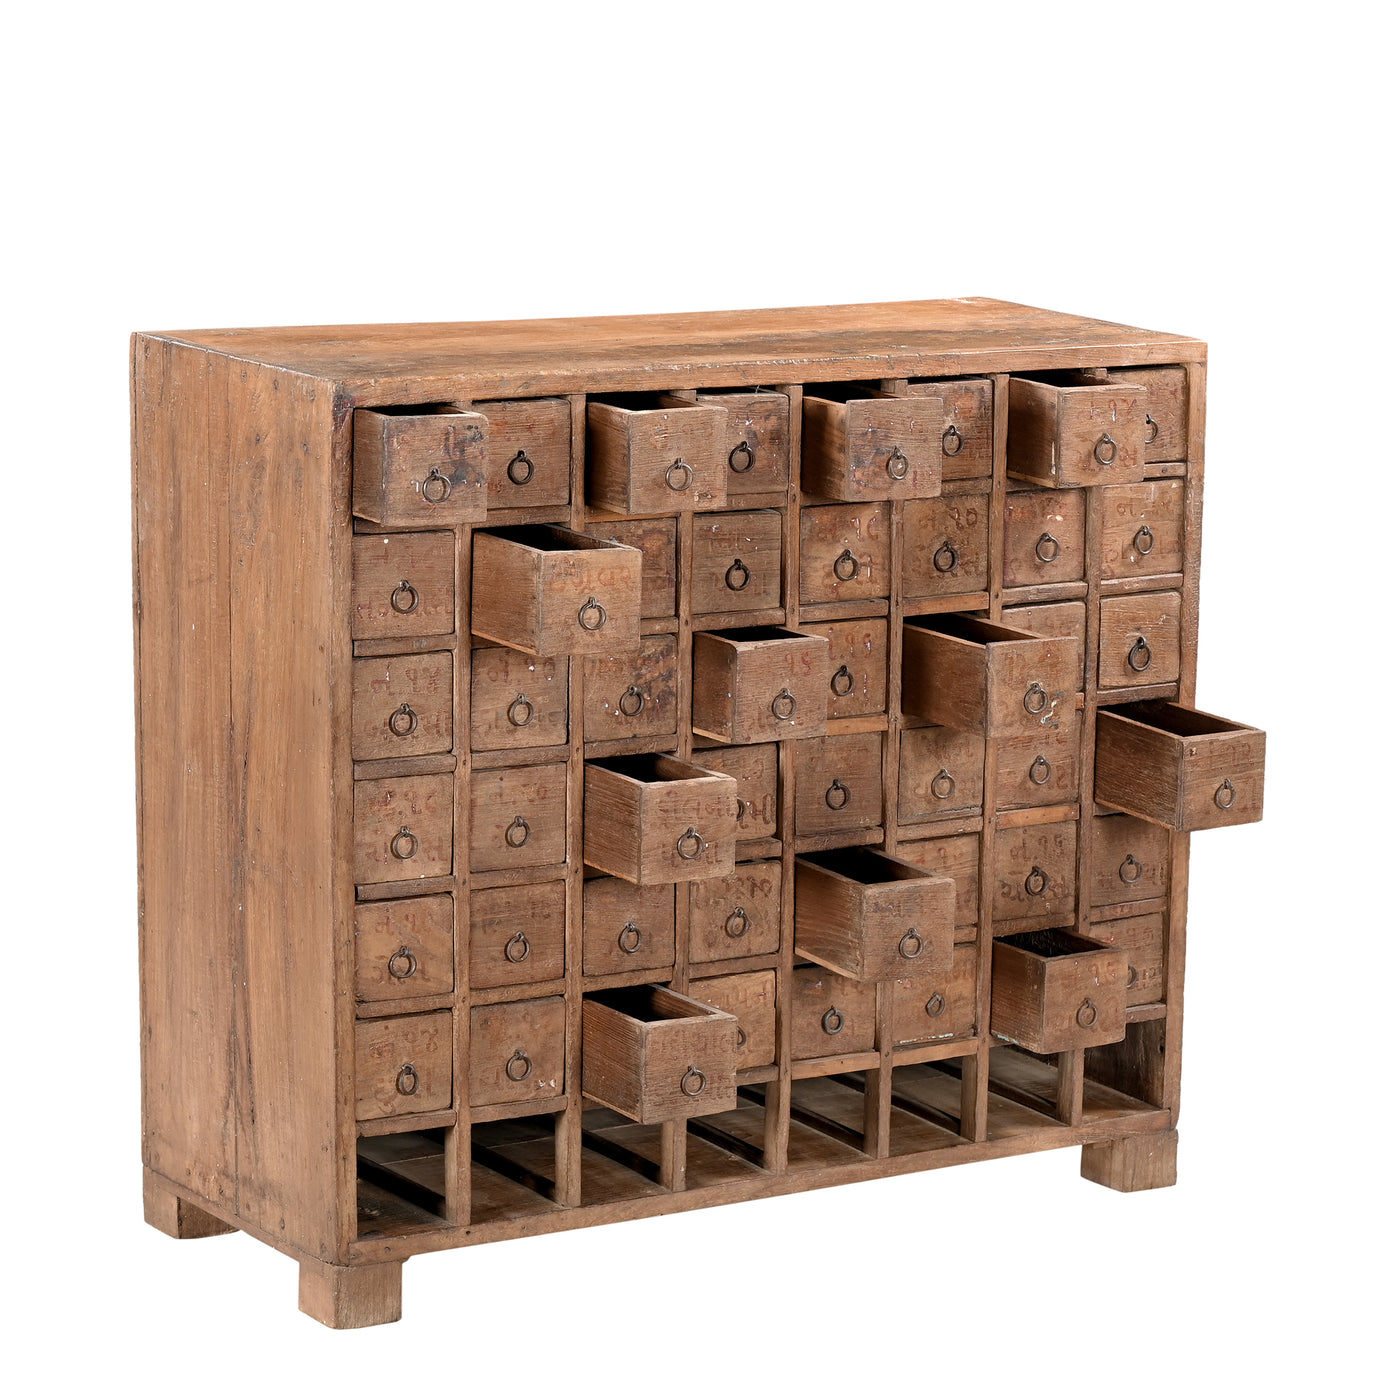 Khejara - Professor furniture with drawers